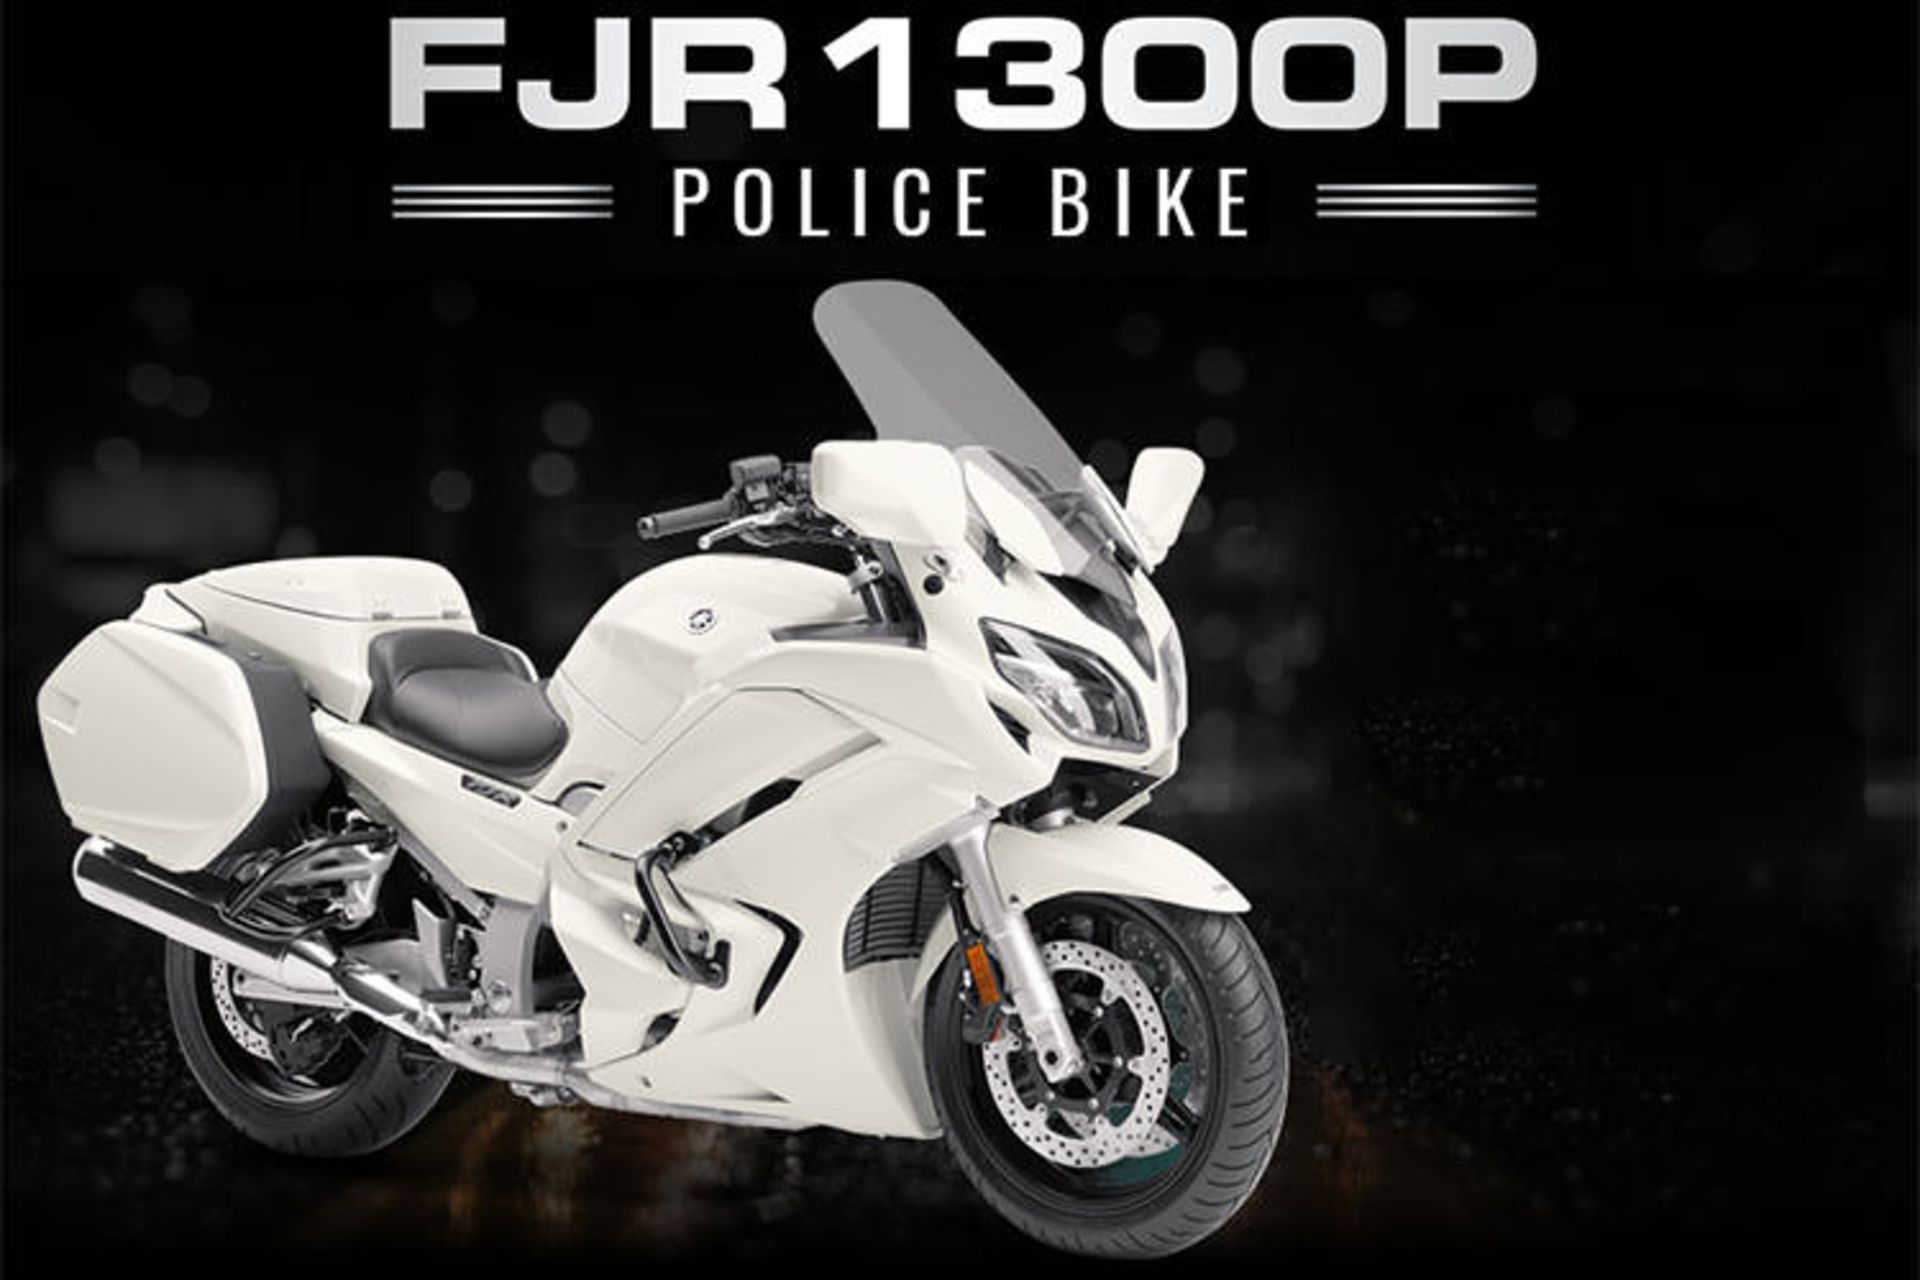 Yamaha FJR1300P motorcycle / موتورسیکلت پلیس یاماها 